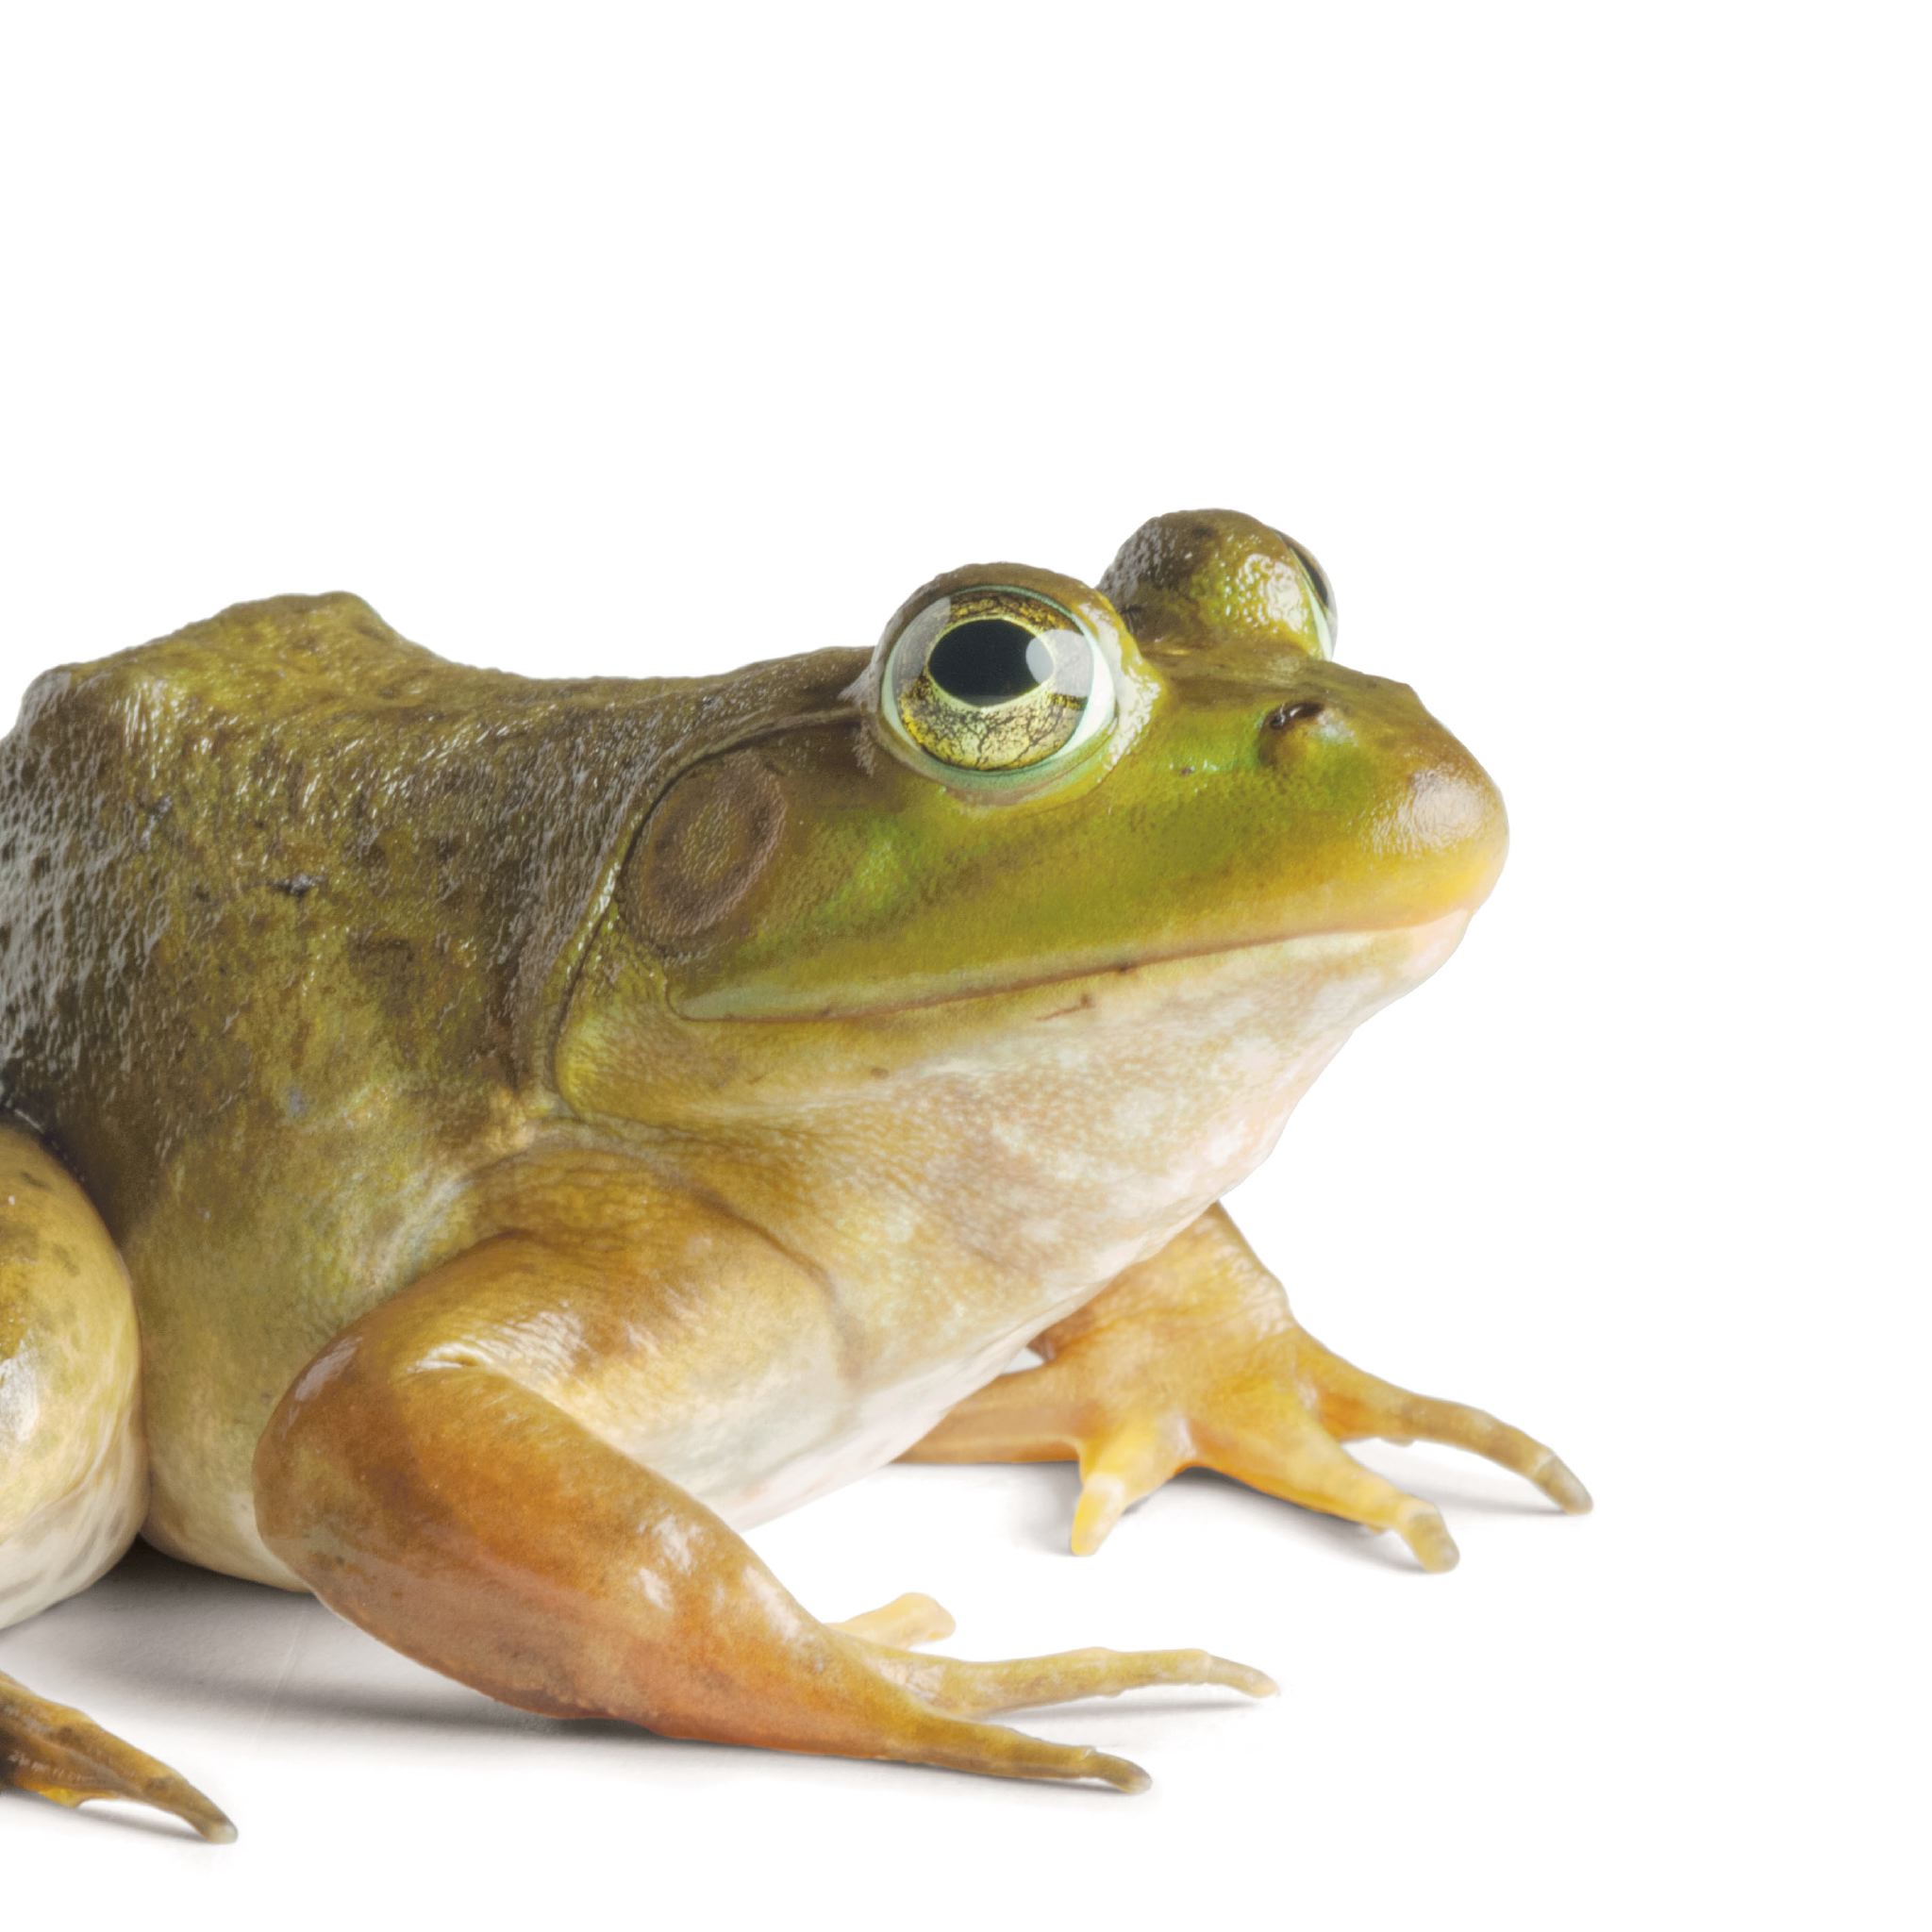 American Bullfrog | National Geographic